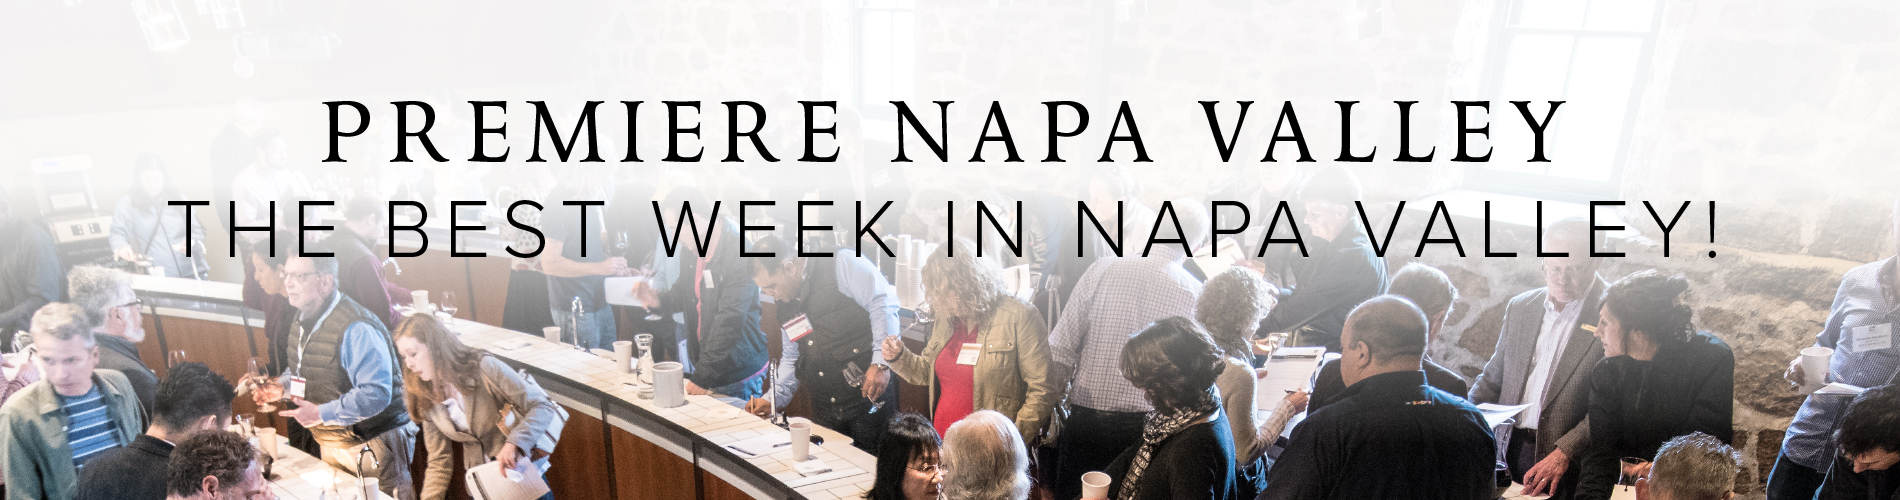 Premiere Napa Valley 2016 - The Best Week in Napa Valley